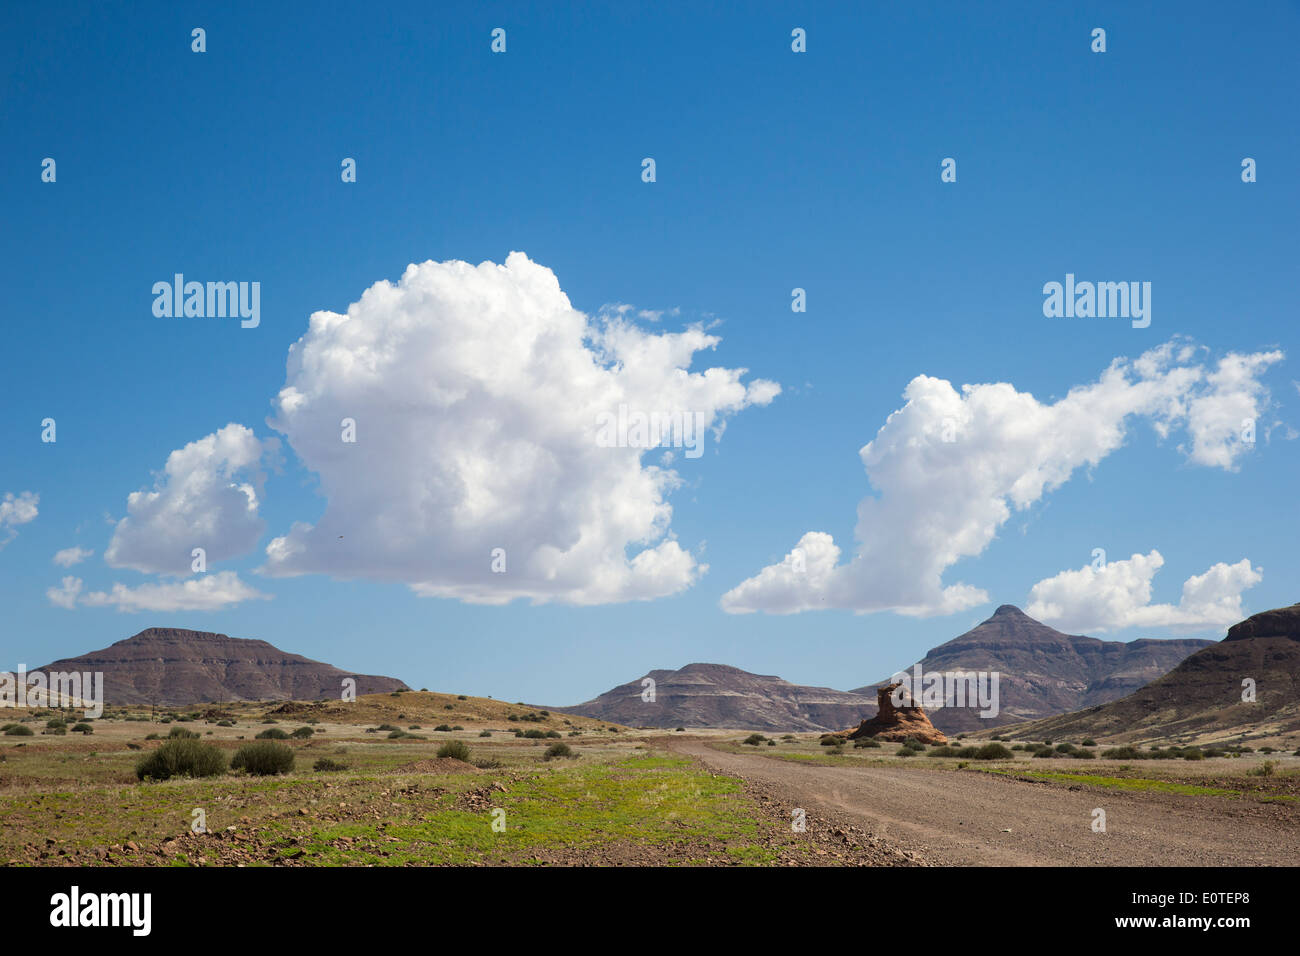 Landscape on the road through Damaraland Stock Photo